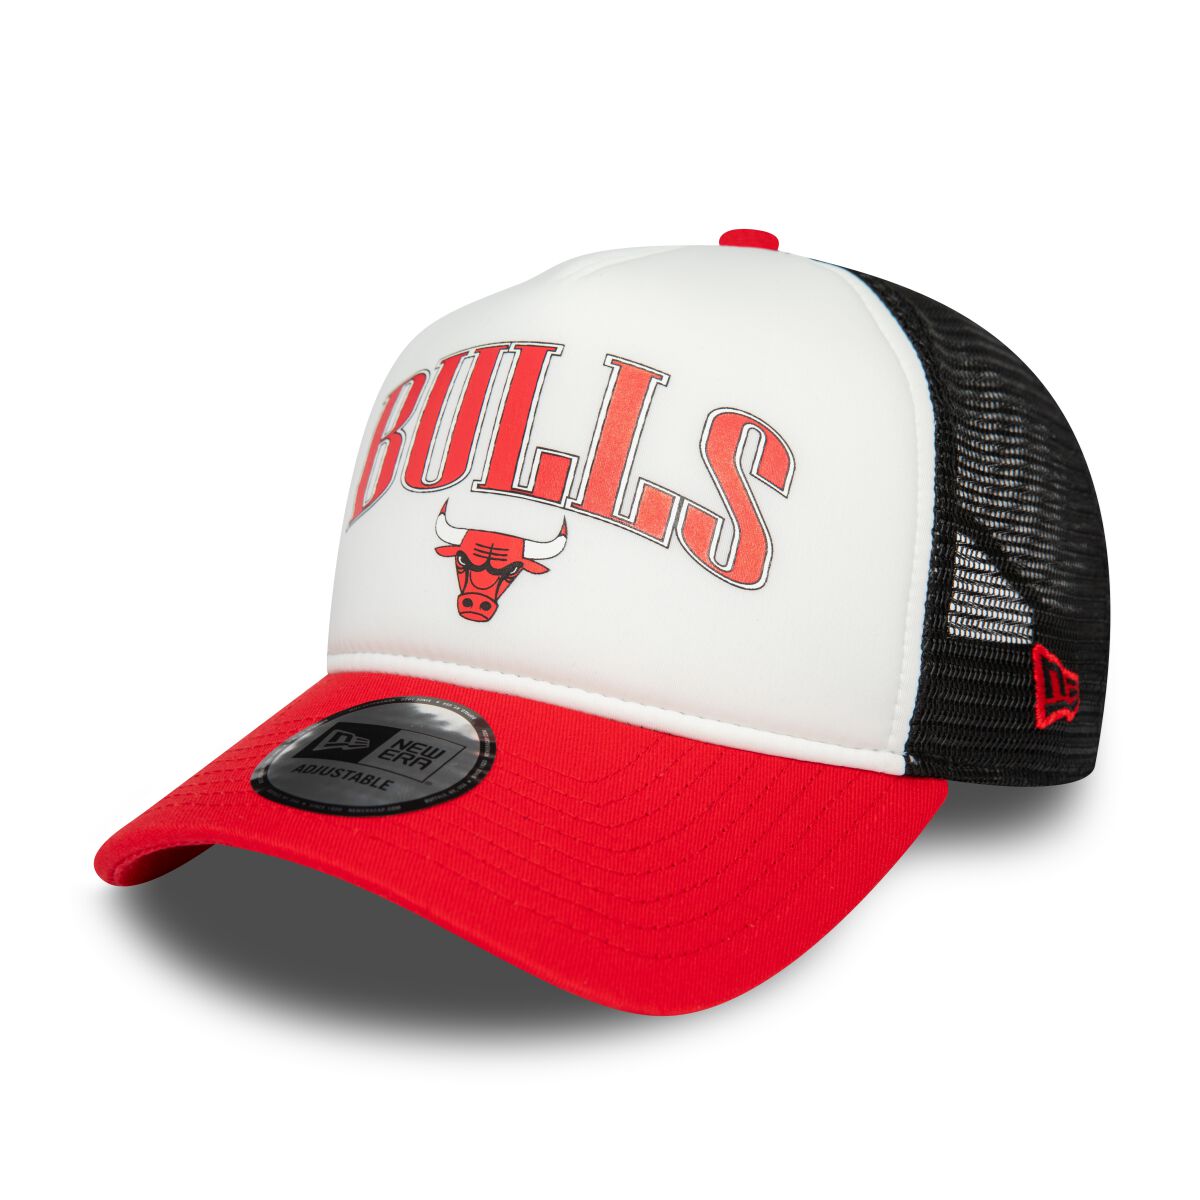 New Era - NBA Retro Trucker 9FORTY - Chicago Bulls Cap multicolor